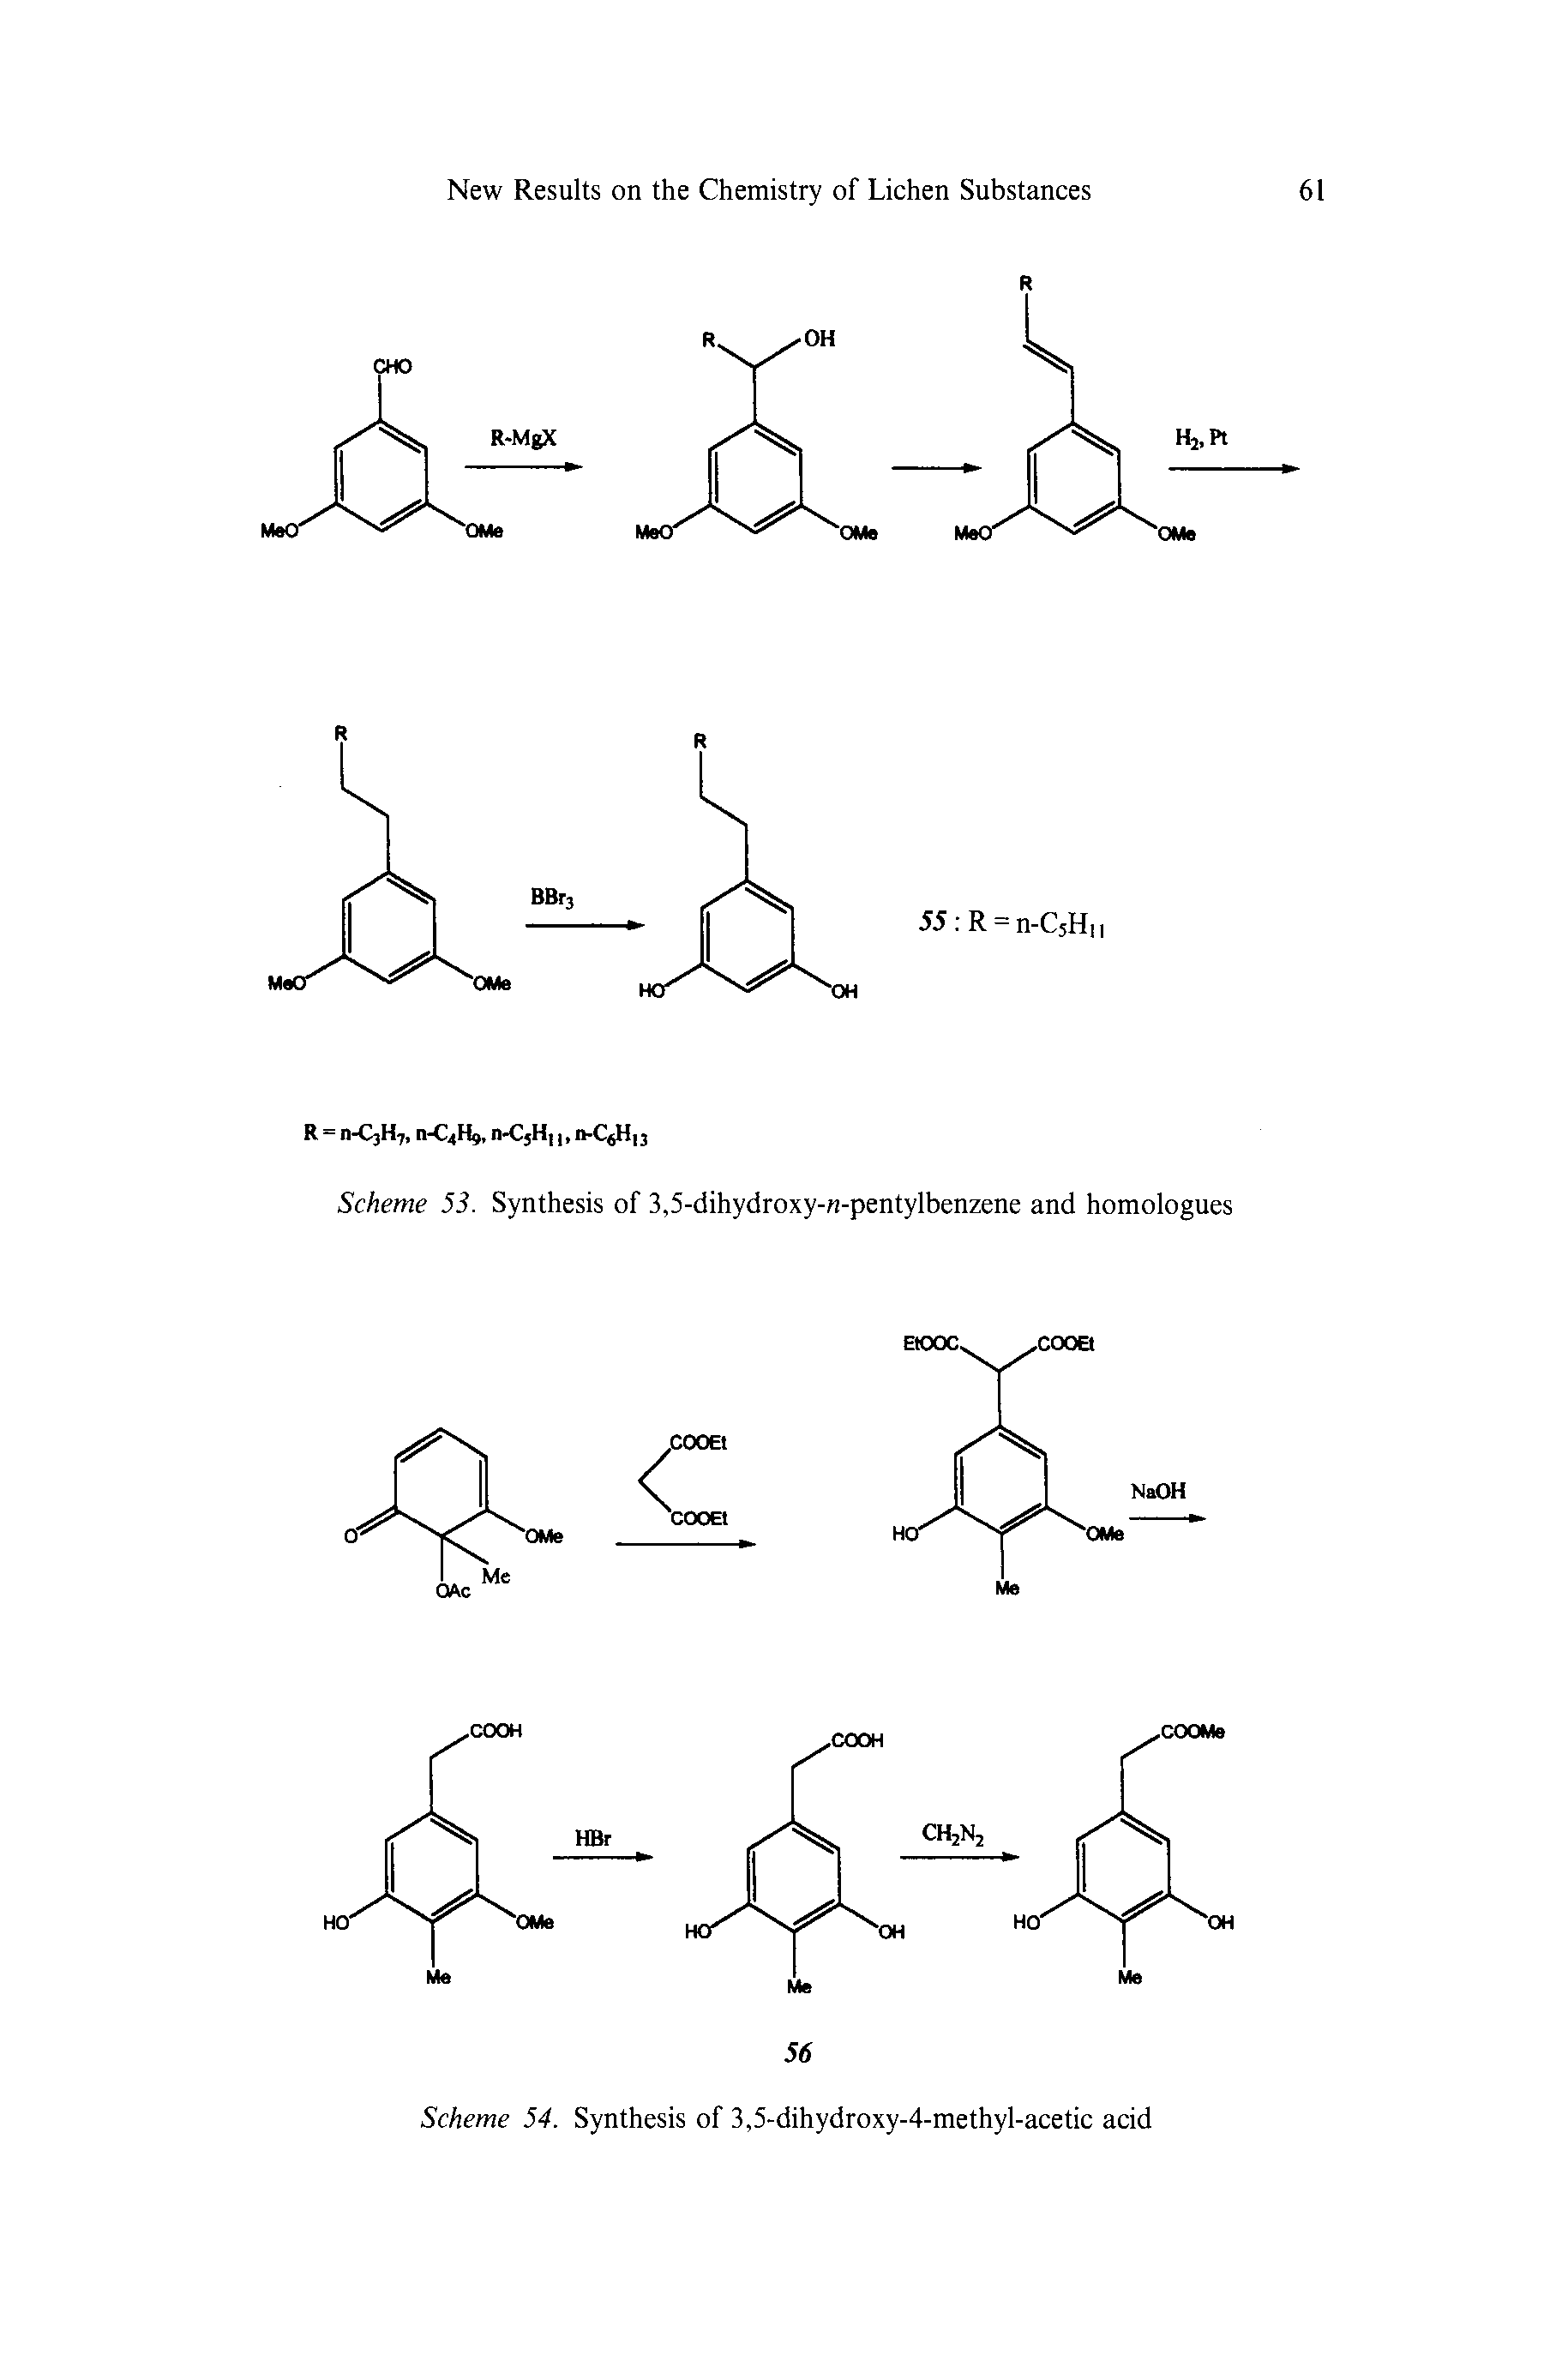 Scheme 54. Synthesis of 3,5-dihydroxy-4-methyl-acetic acid...